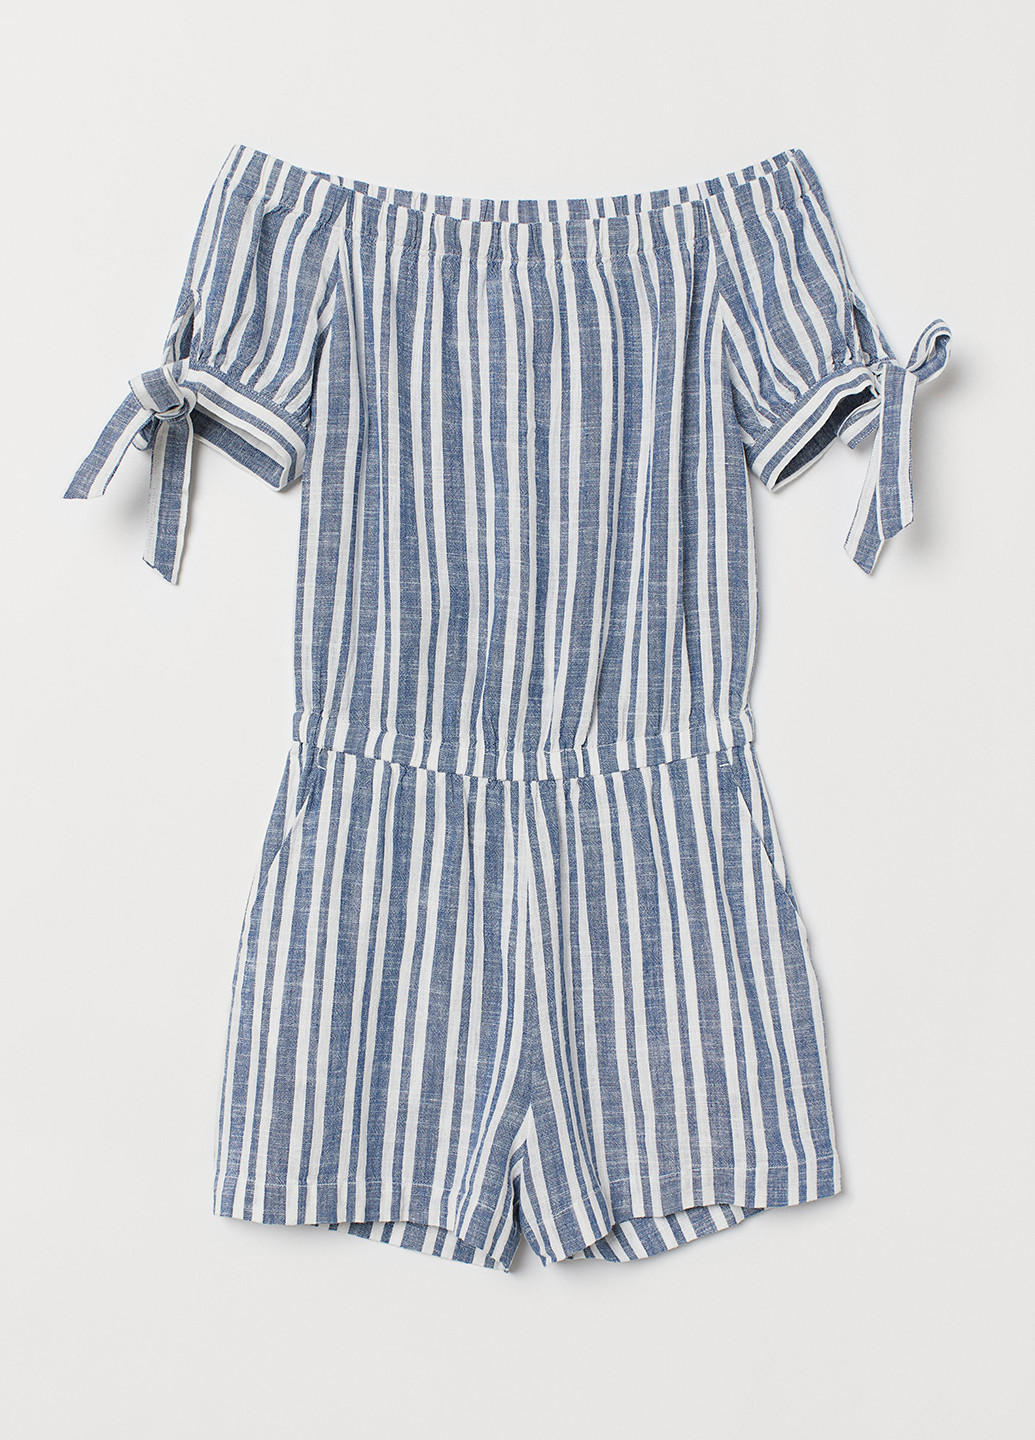 Комбинезон H&M комбинезон-шорты полоска светло-синий кэжуал лен